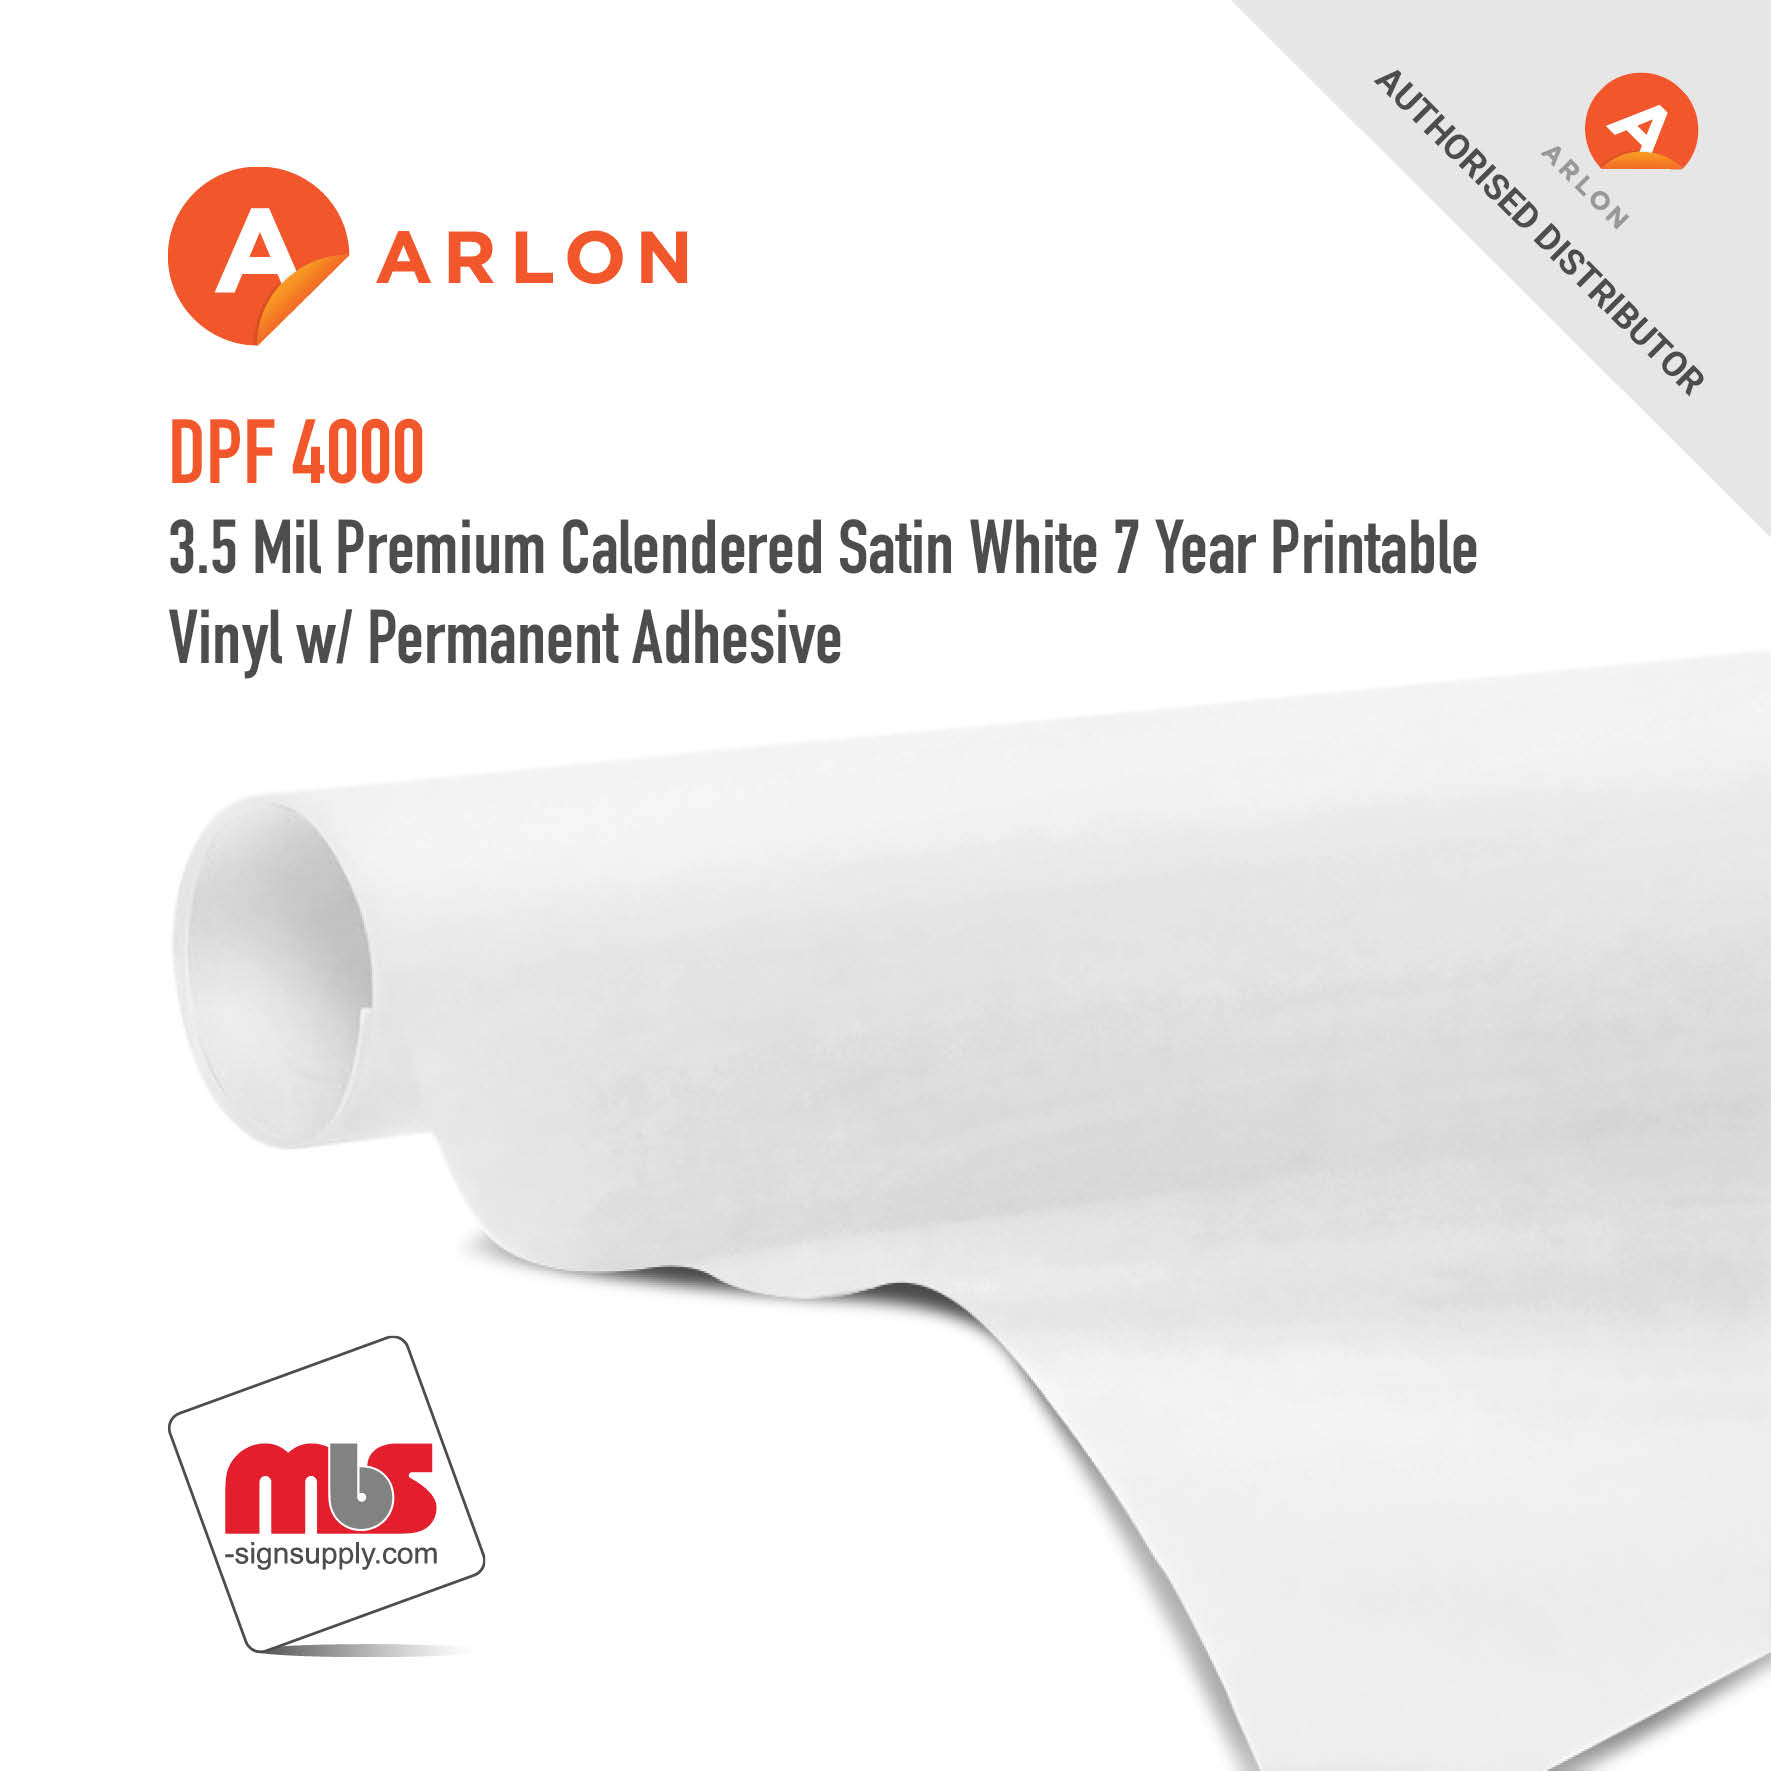 30'' x 50 Yard Roll - Arlon DPF 4000 3.5 Mil  Premium Calendered Satin White 7 Year Printable Vinyl w/ Permanent Adhesive